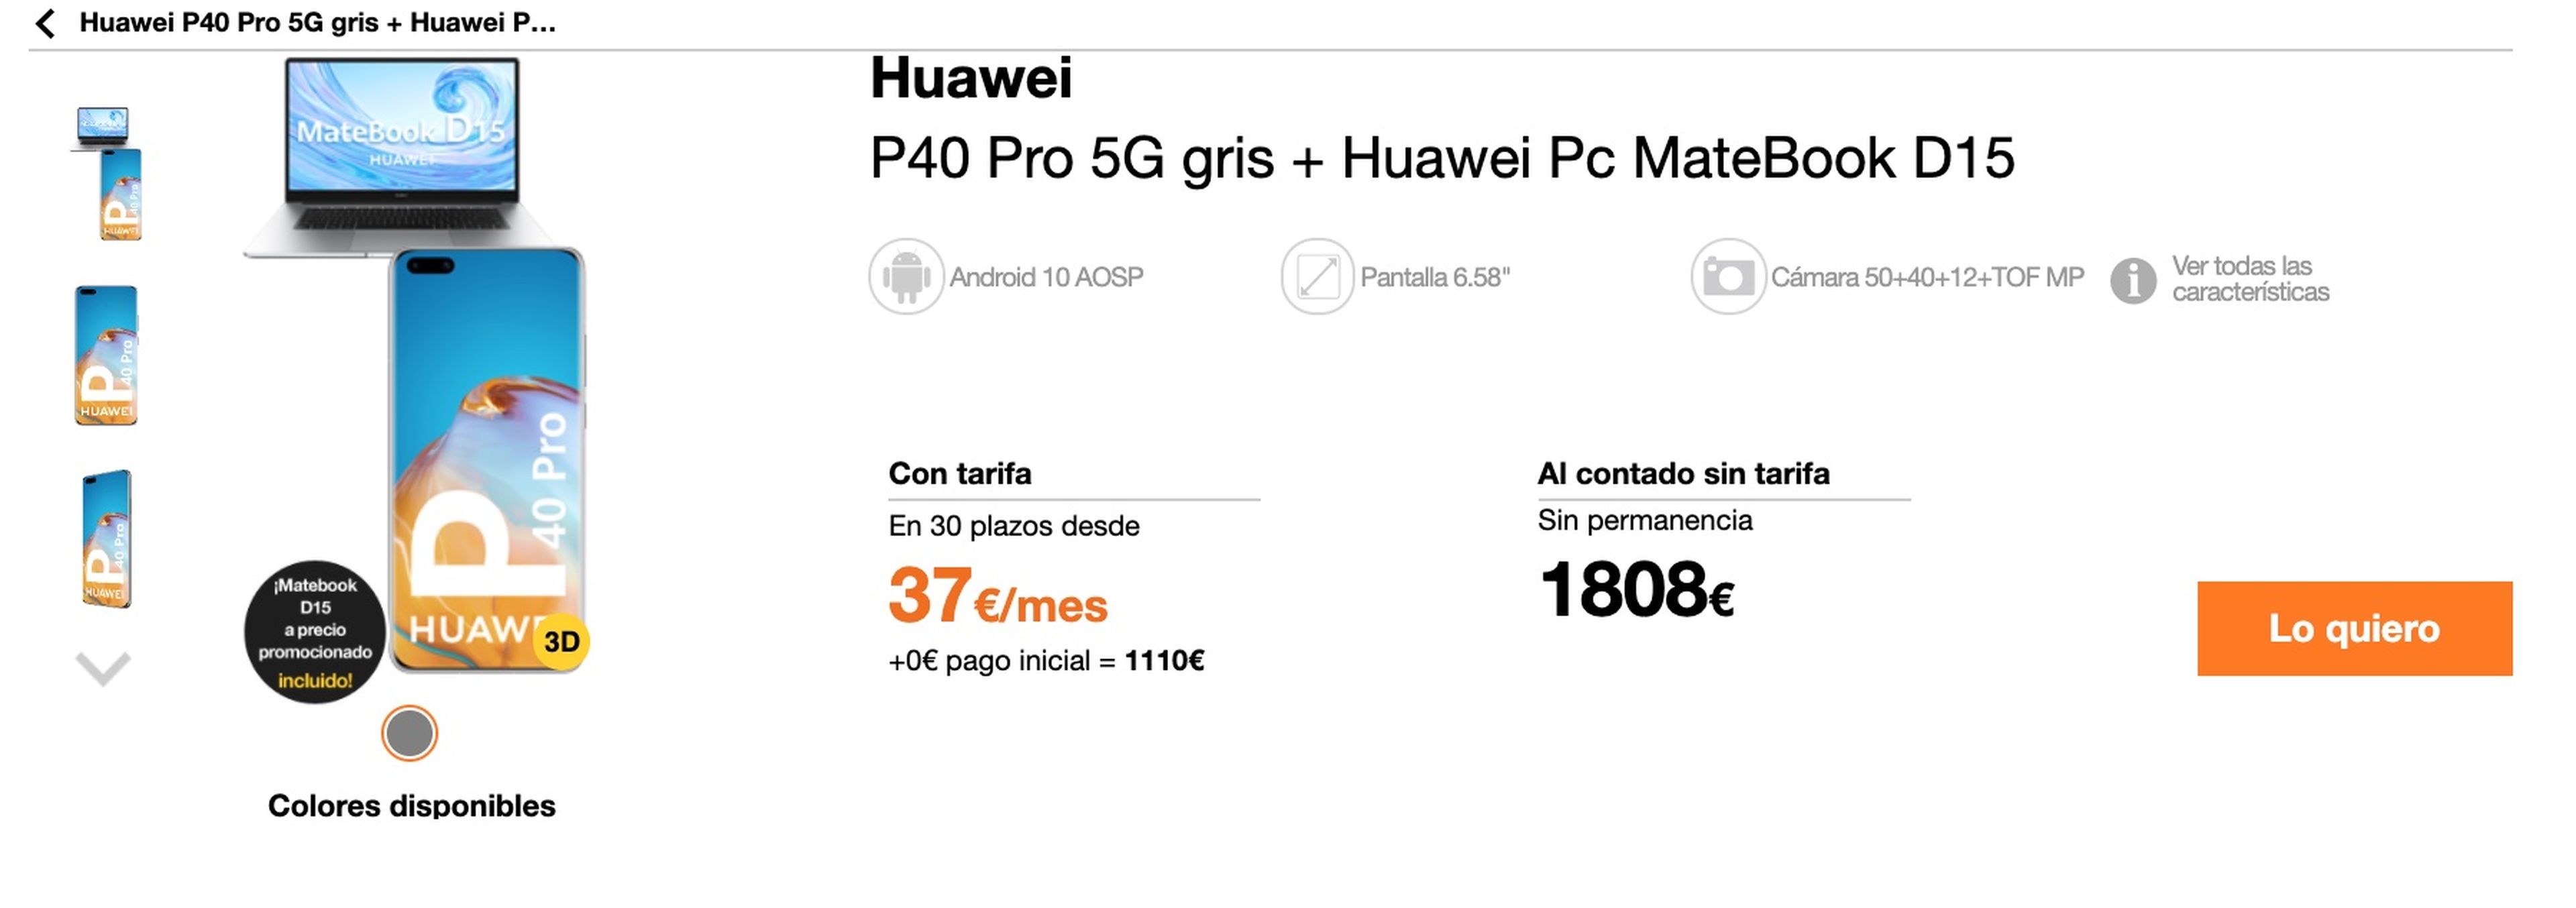 Oferta pack exclusivo de Huawei y Orange